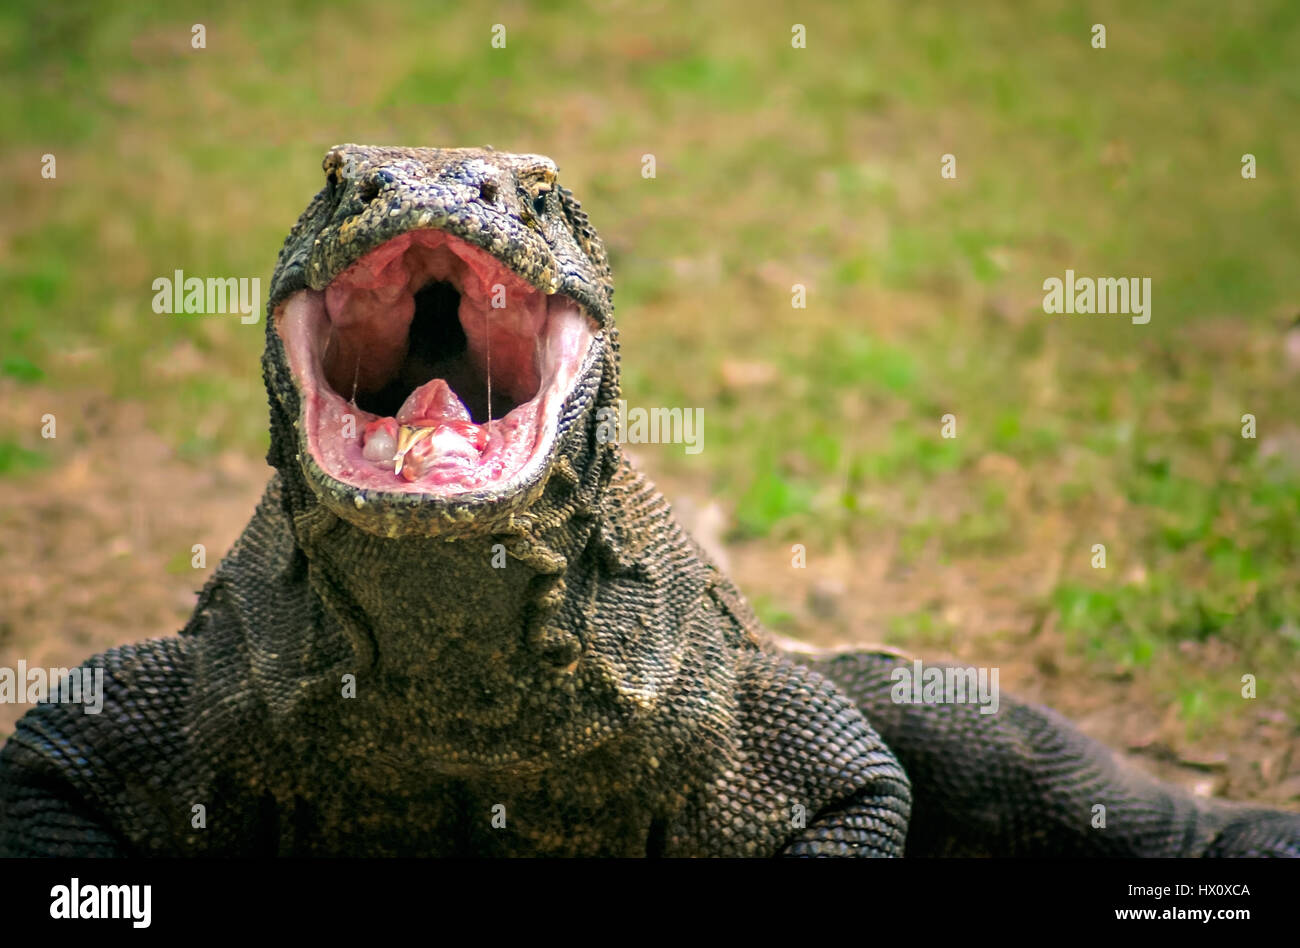 Finally met the majestic yet terrifying Komodo Dragons! Indonesia